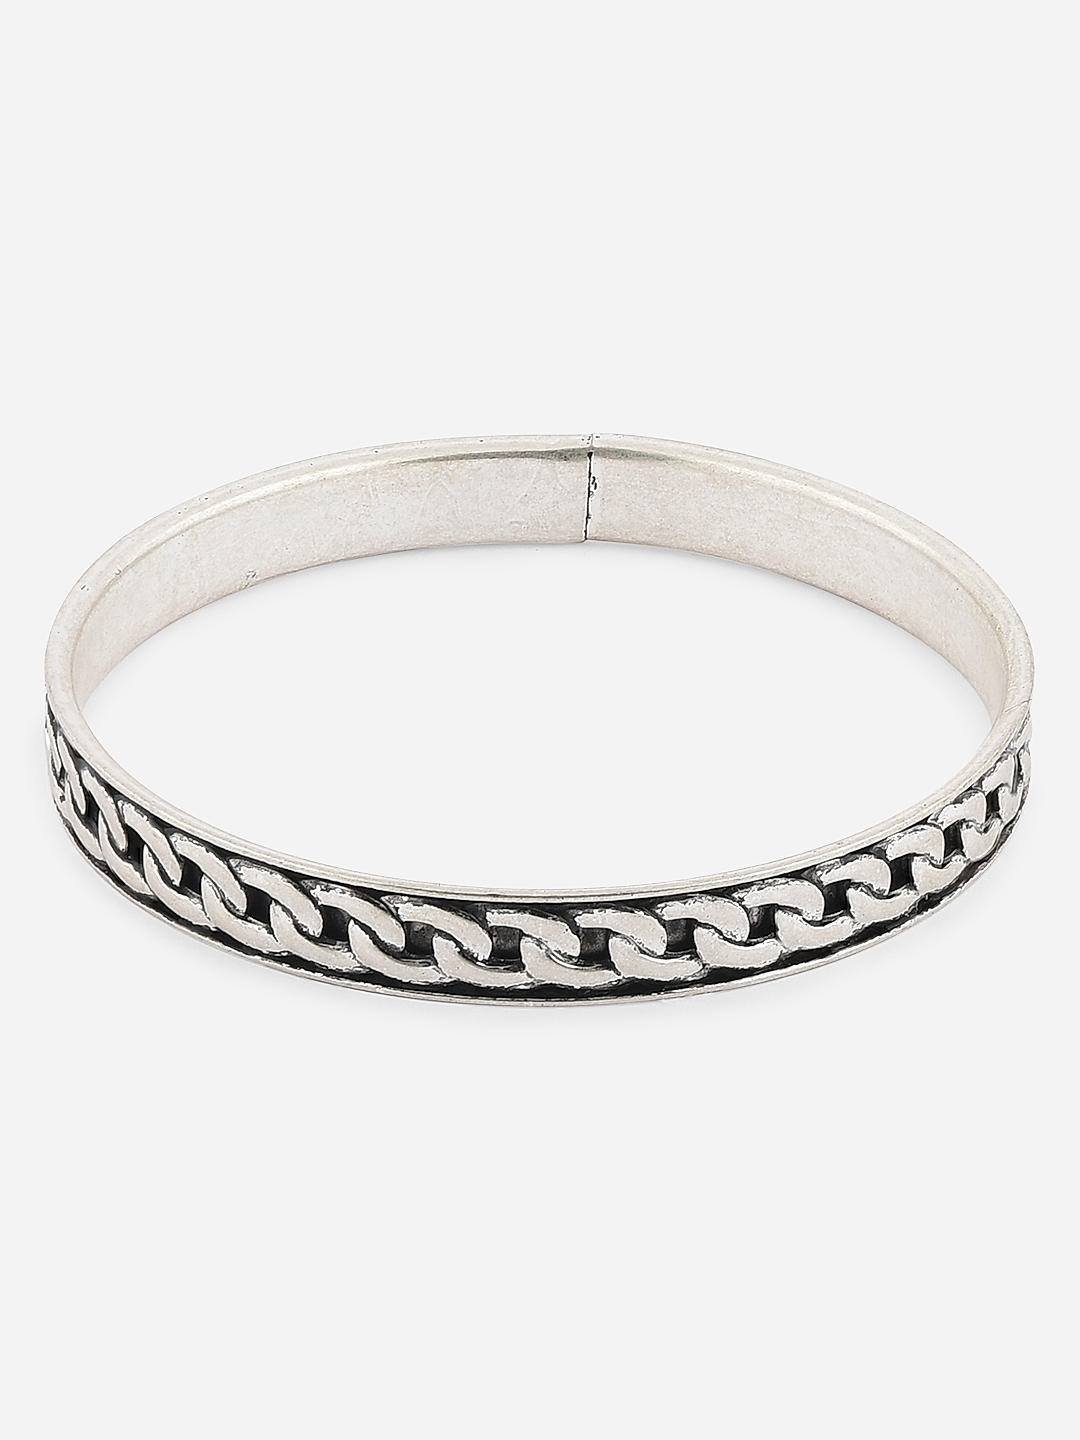 Buy Karishma Kreations Adjustable Bracelet for Men Girls Women Boys Fashion  Silver Bracelet Stainless Steel Cuff accessories Bracelets adjustable at  Amazon.in